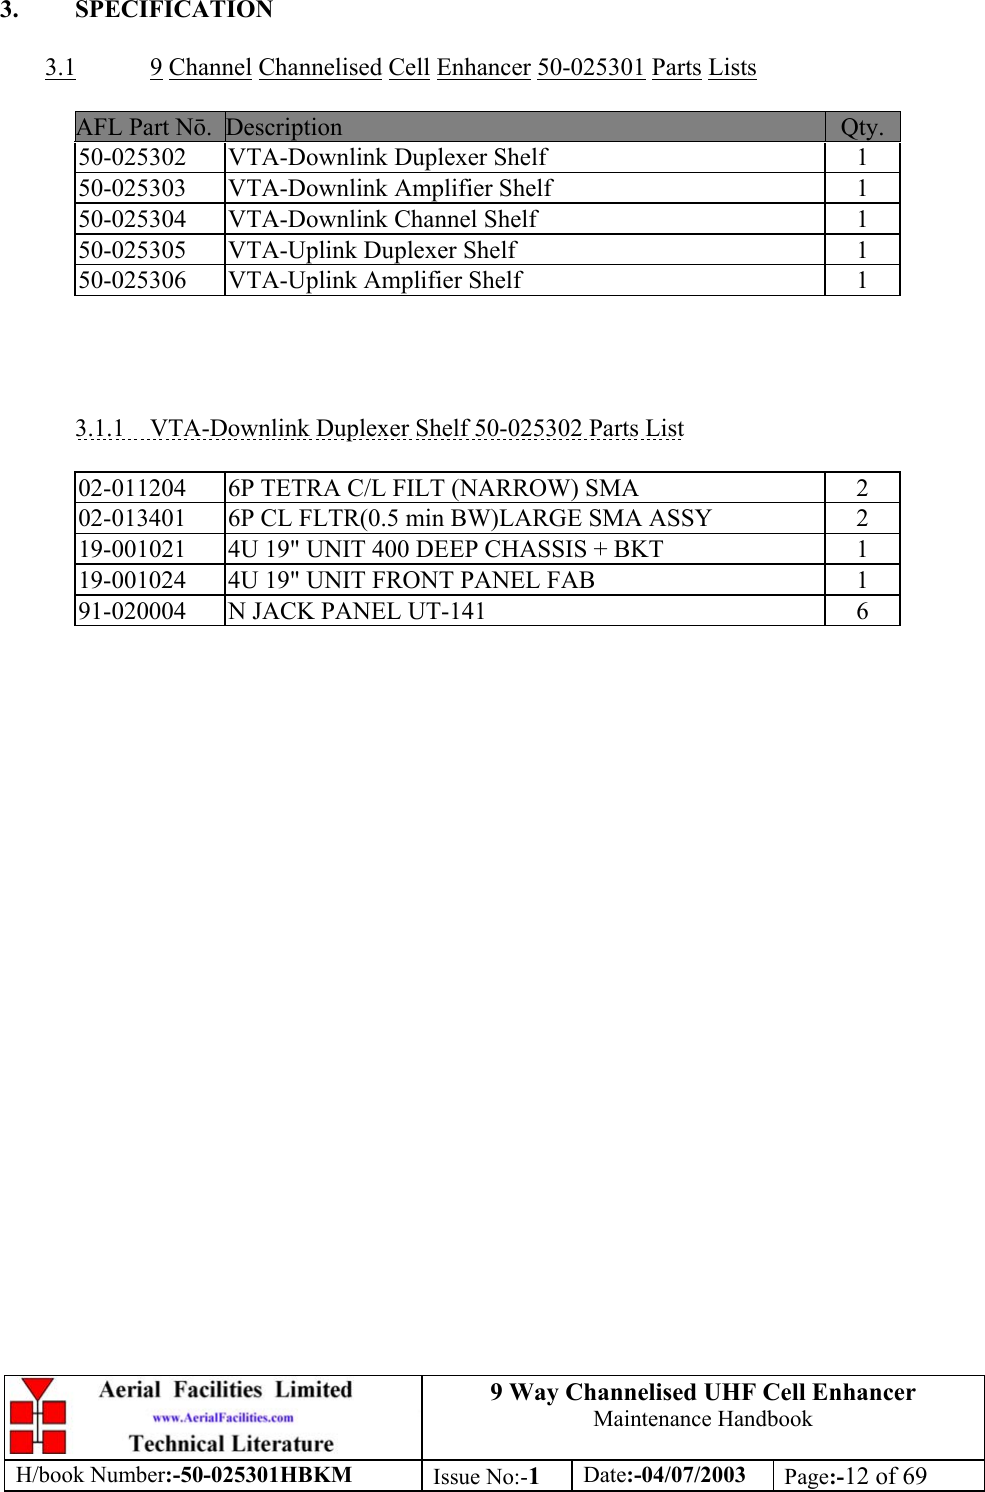 9 Way Channelised UHF Cell EnhancerMaintenance HandbookH/book Number:-50-025301HBKM Issue No:-1Date:-04/07/2003 Page:-12 of 693. SPECIFICATION3.1 9 Channel Channelised Cell Enhancer 50-025301 Parts ListsAFL Part N.Description Qty.50-025302 VTA-Downlink Duplexer Shelf 150-025303 VTA-Downlink Amplifier Shelf 150-025304 VTA-Downlink Channel Shelf 150-025305 VTA-Uplink Duplexer Shelf 150-025306 VTA-Uplink Amplifier Shelf 13.1.1    VTA-Downlink Duplexer Shelf 50-025302 Parts List02-011204 6P TETRA C/L FILT (NARROW) SMA 202-013401 6P CL FLTR(0.5 min BW)LARGE SMA ASSY 219-001021 4U 19&quot; UNIT 400 DEEP CHASSIS + BKT 119-001024 4U 19&quot; UNIT FRONT PANEL FAB 191-020004 N JACK PANEL UT-141 6